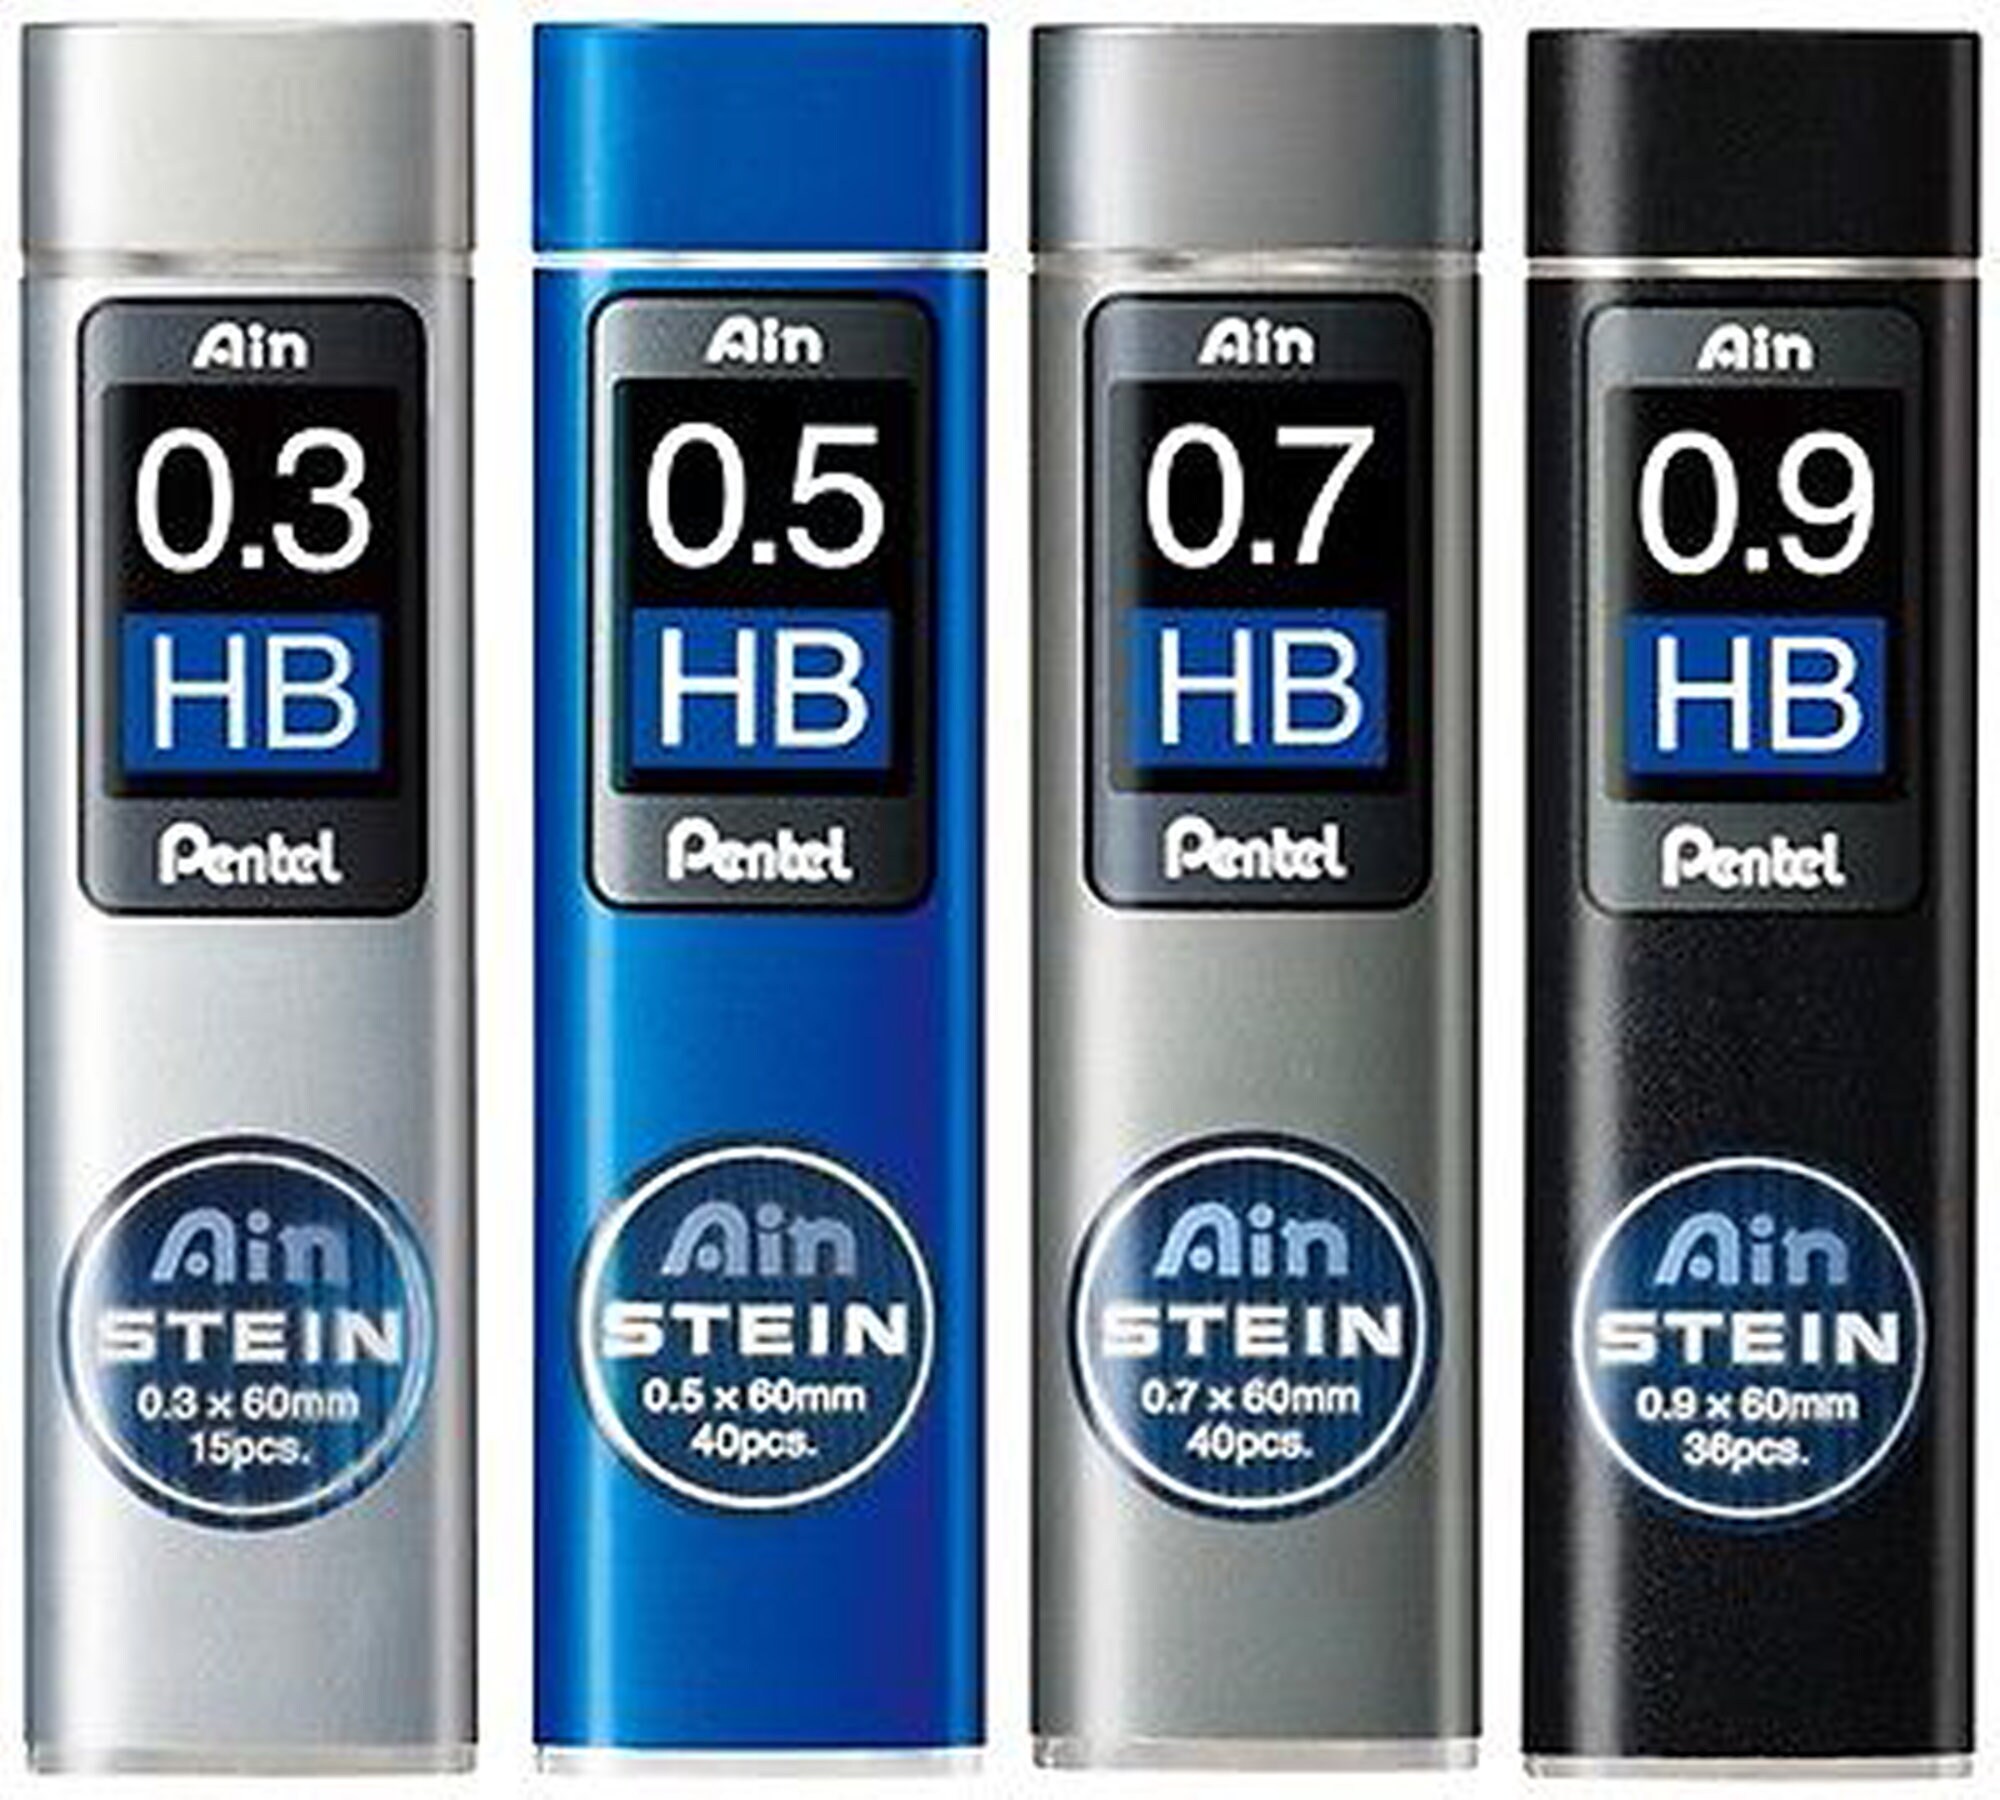 Pentel Ain Stein C275 0.5mm x 60mm x 40 pcs pencil leads x 2 tubes 